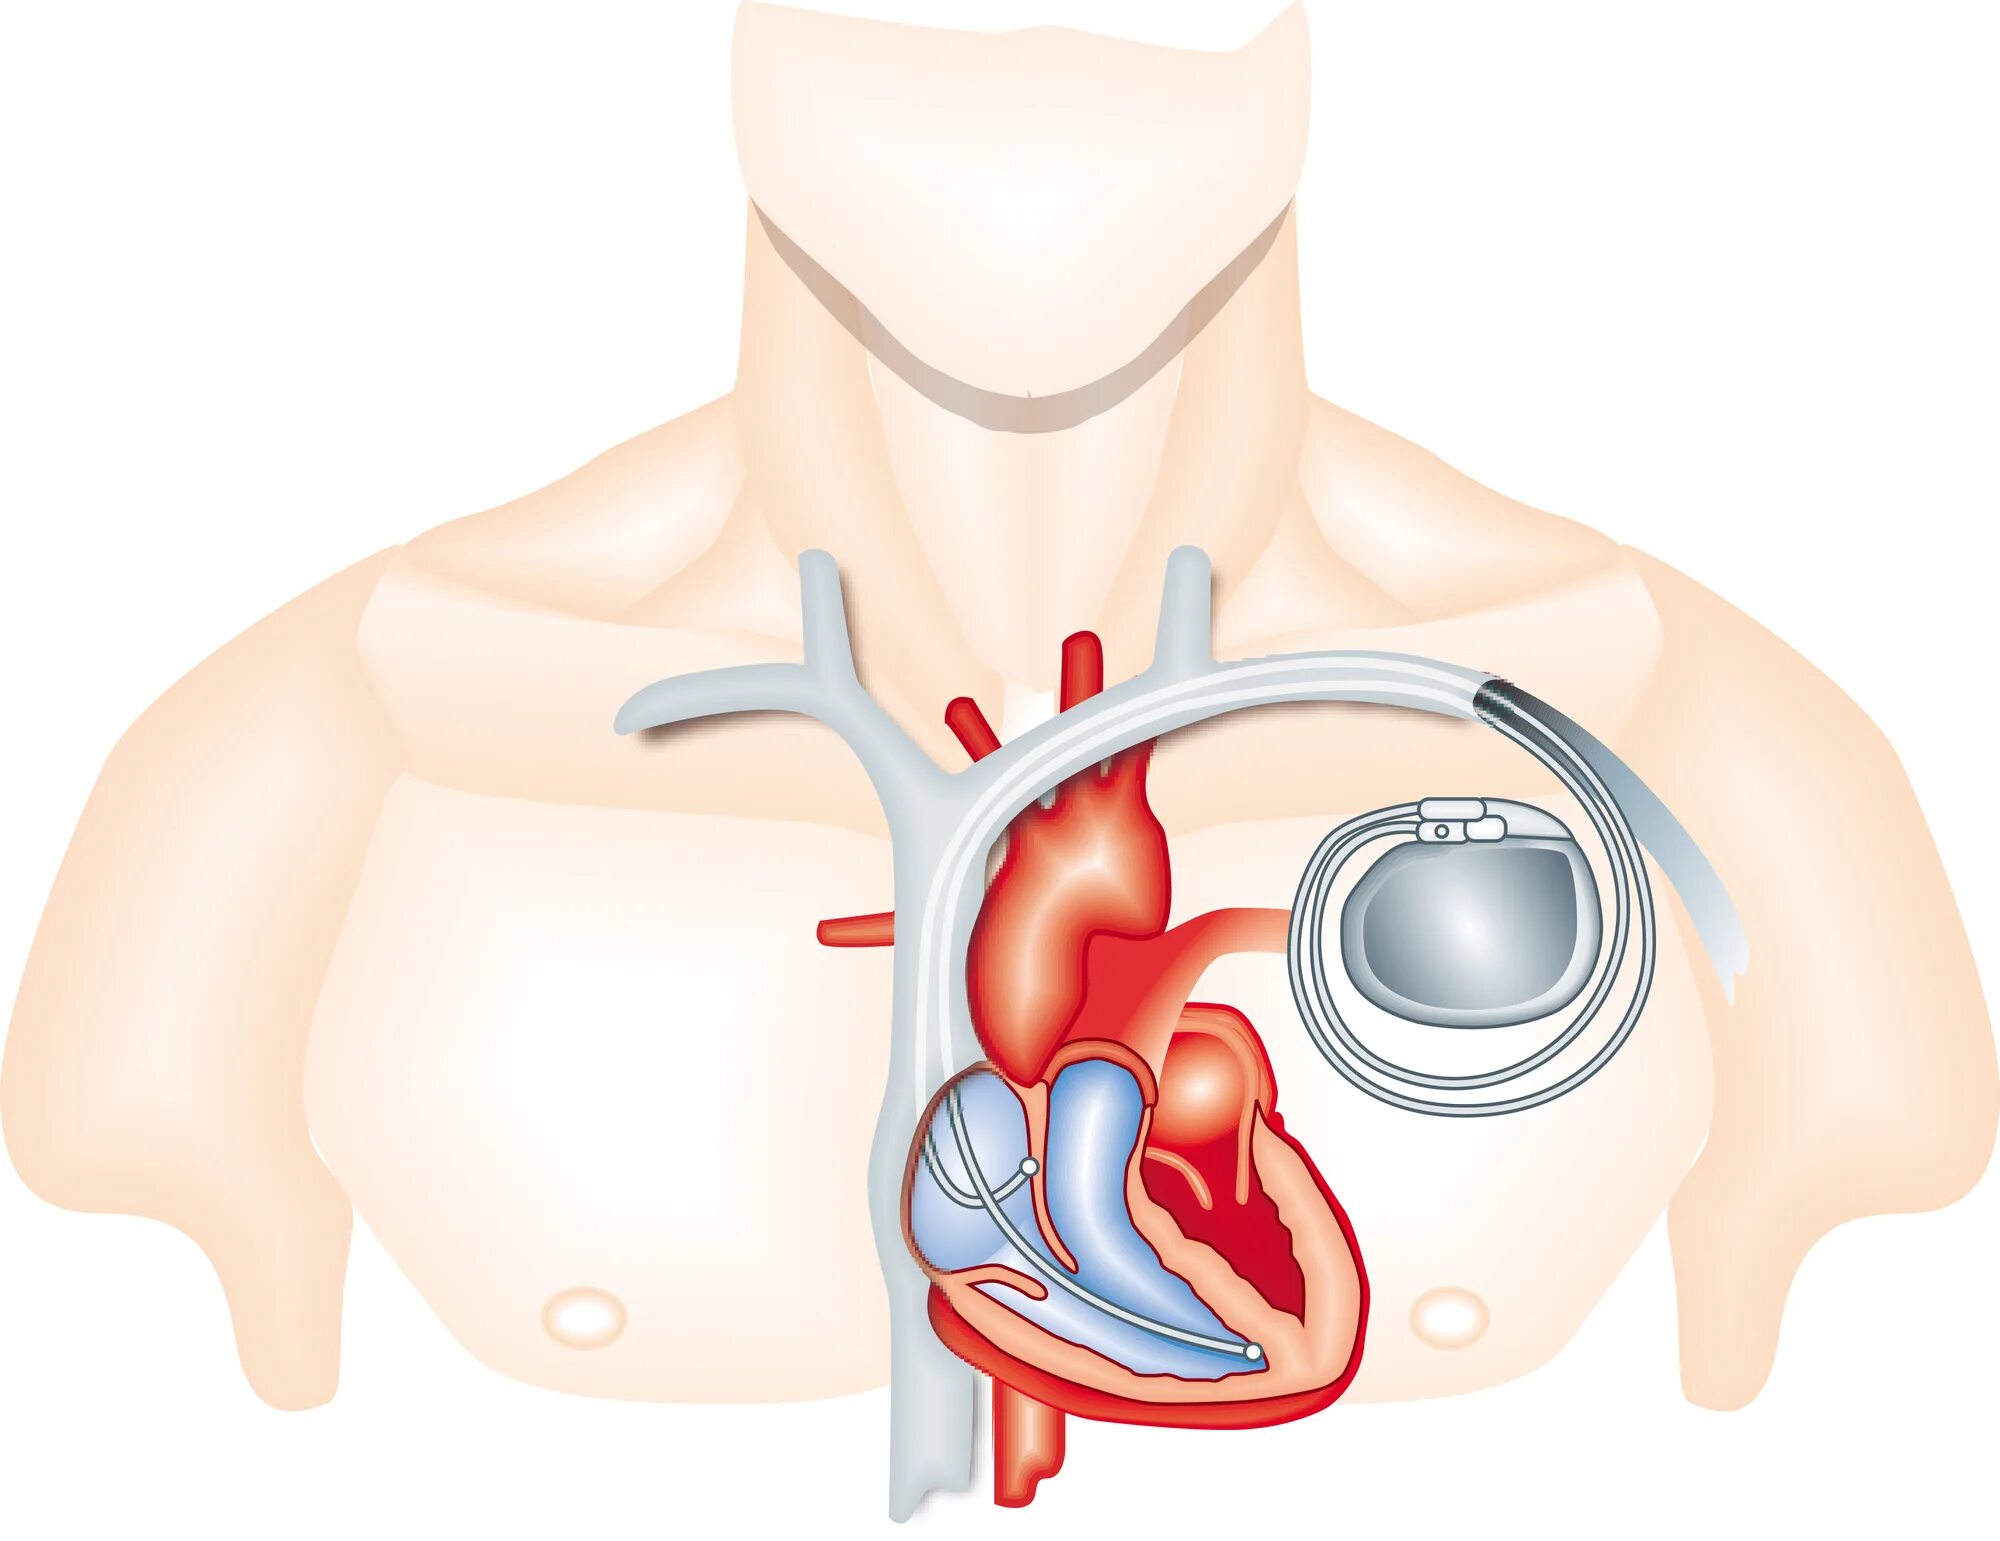 Кардиостимулятор Pacemaker. Операция кардиостимулятор сердца. Имплантация сердца кардиостимулятор. Электрокардиостимулятор имплантируемый однокамерный.